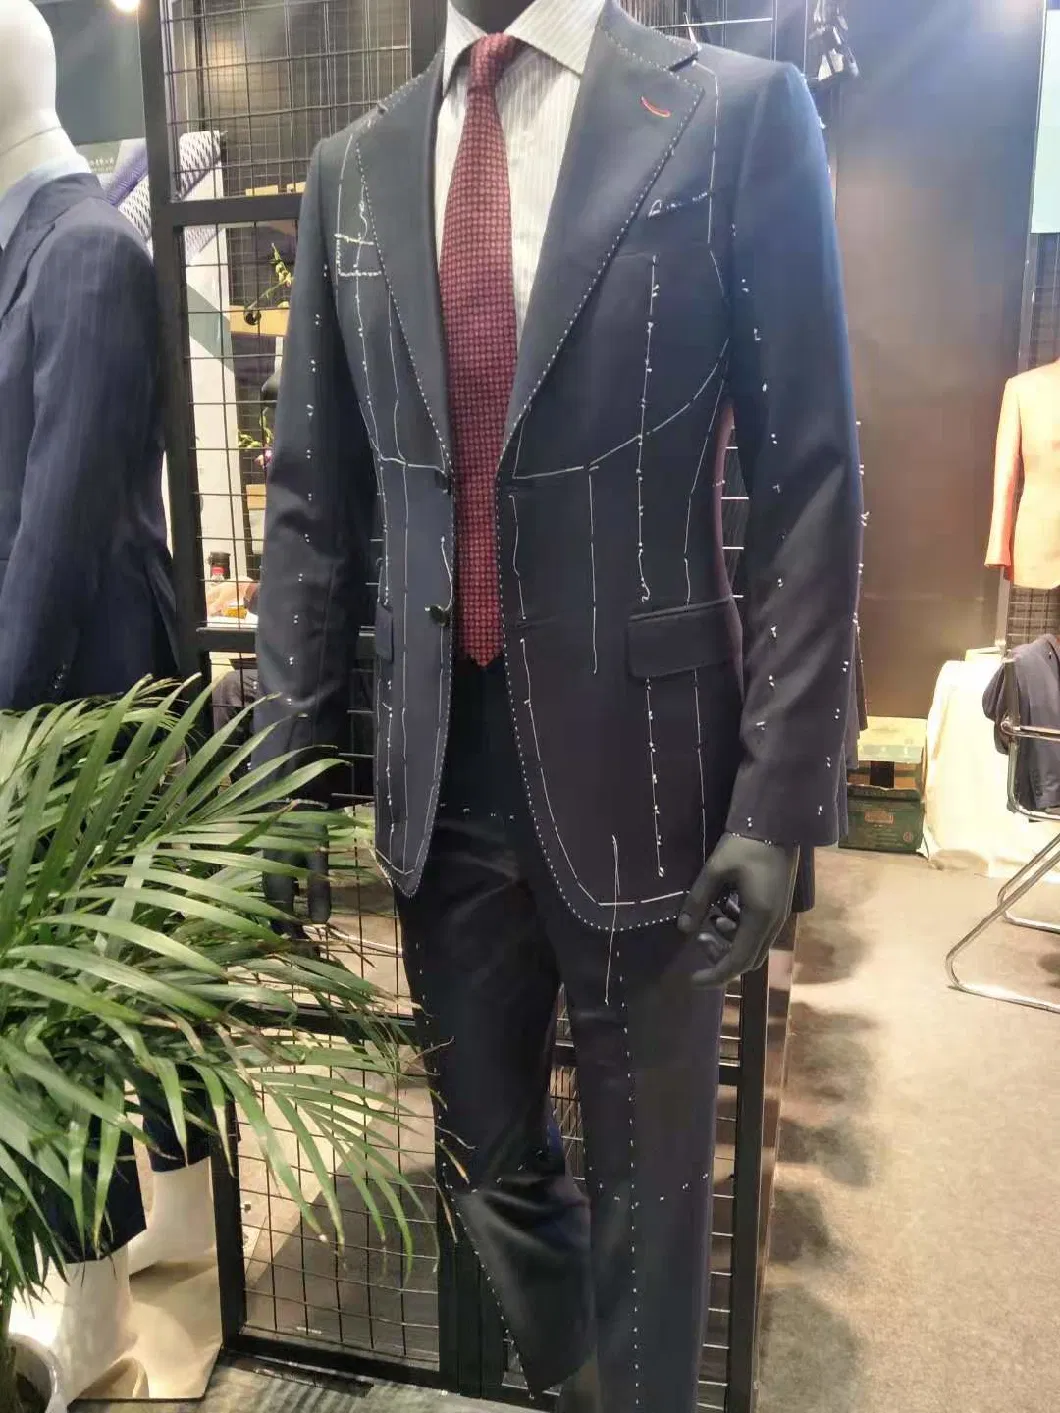 Bespoke Tailor Suit Made-to-Measure Wedding Suit Apparel Bespoke Man Business Men Suit